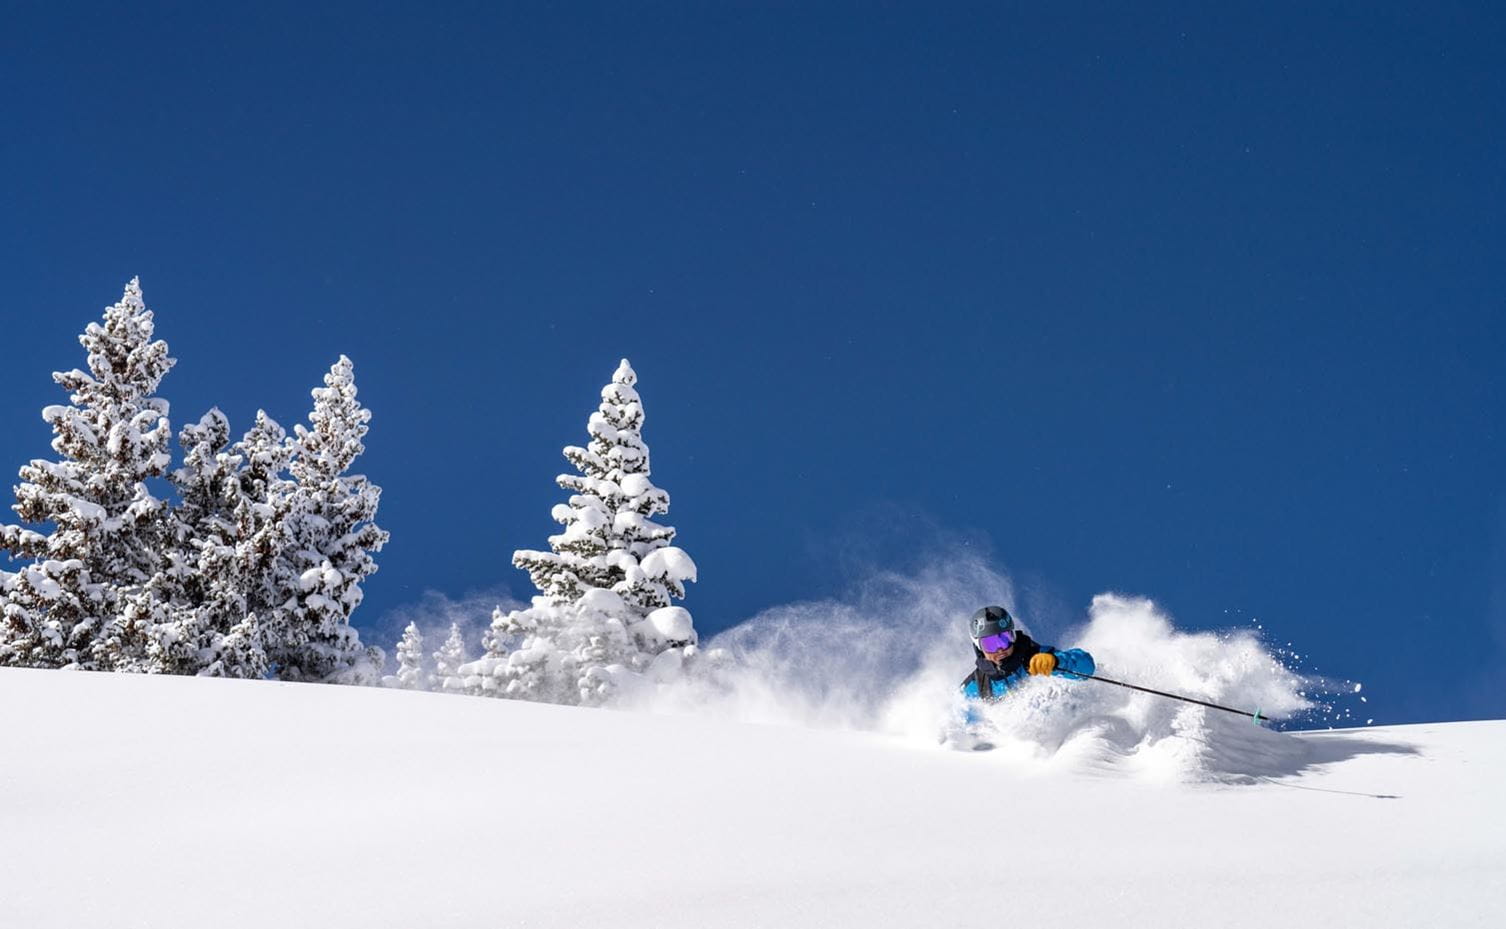 Aspen Snowmass lift tickets and season passes